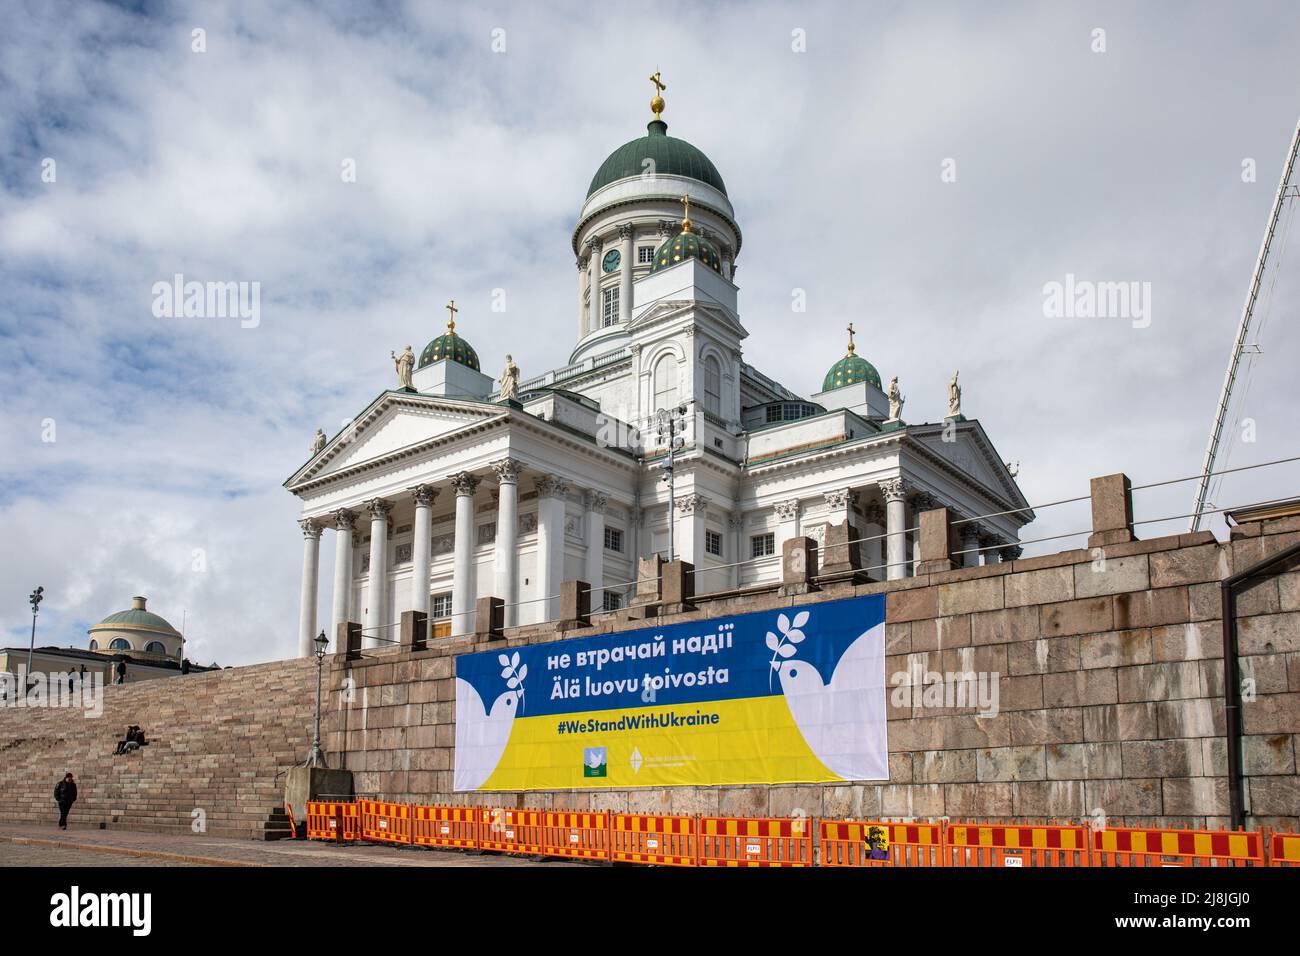 Älä luovu toivosta. La Catedral de Helsinki apoya a Ucrania en Helsinki, Finlandia. Foto de stock